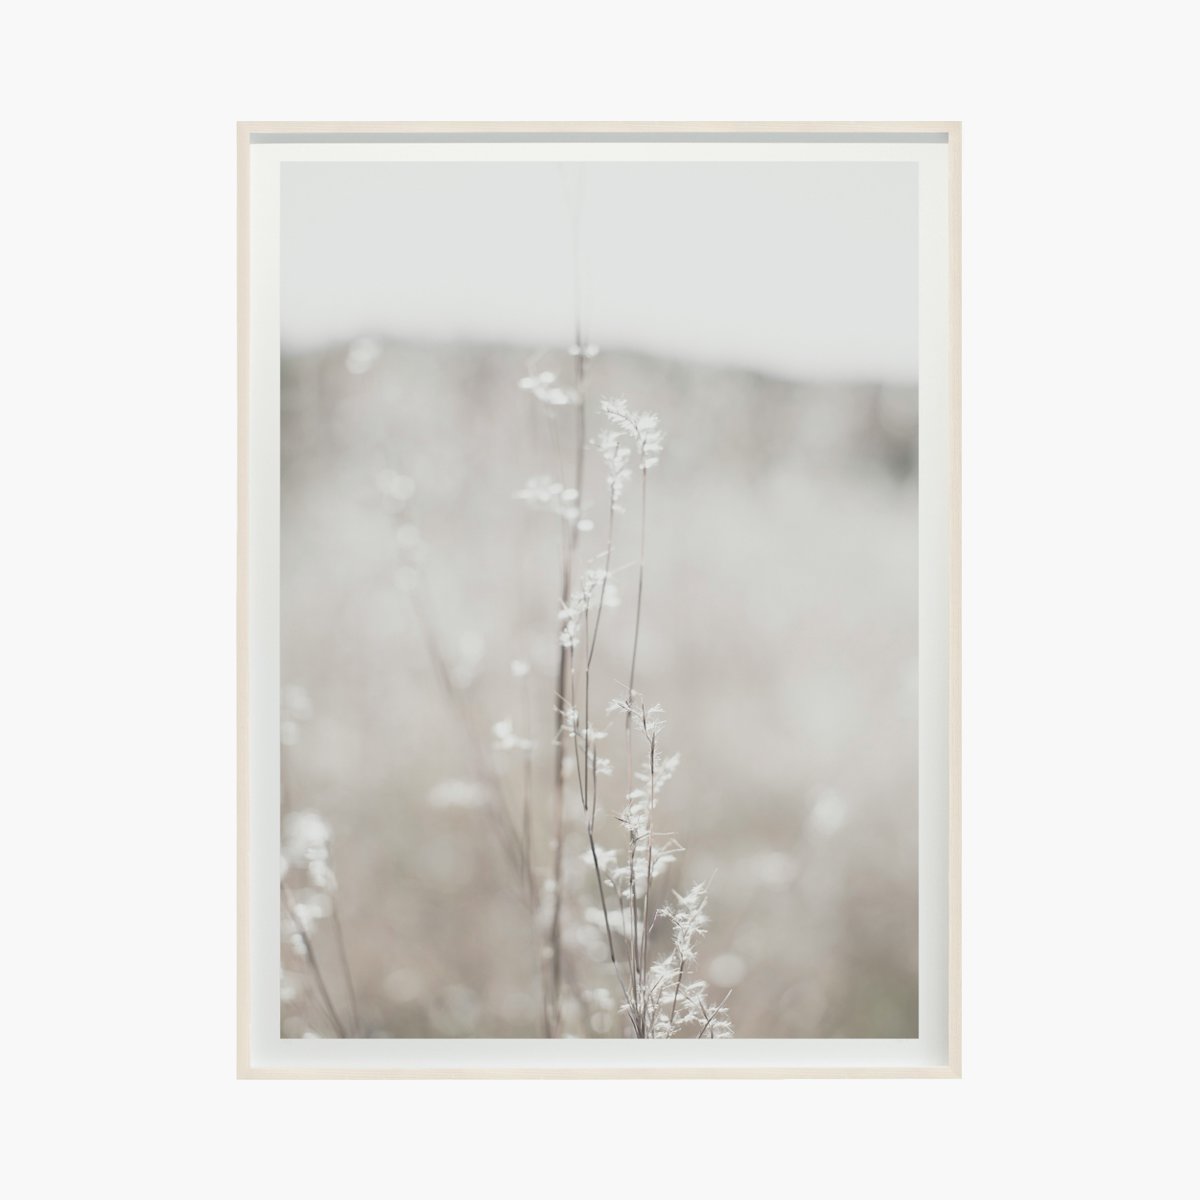 “Fields + Flora No. 5450” by Cas Friese